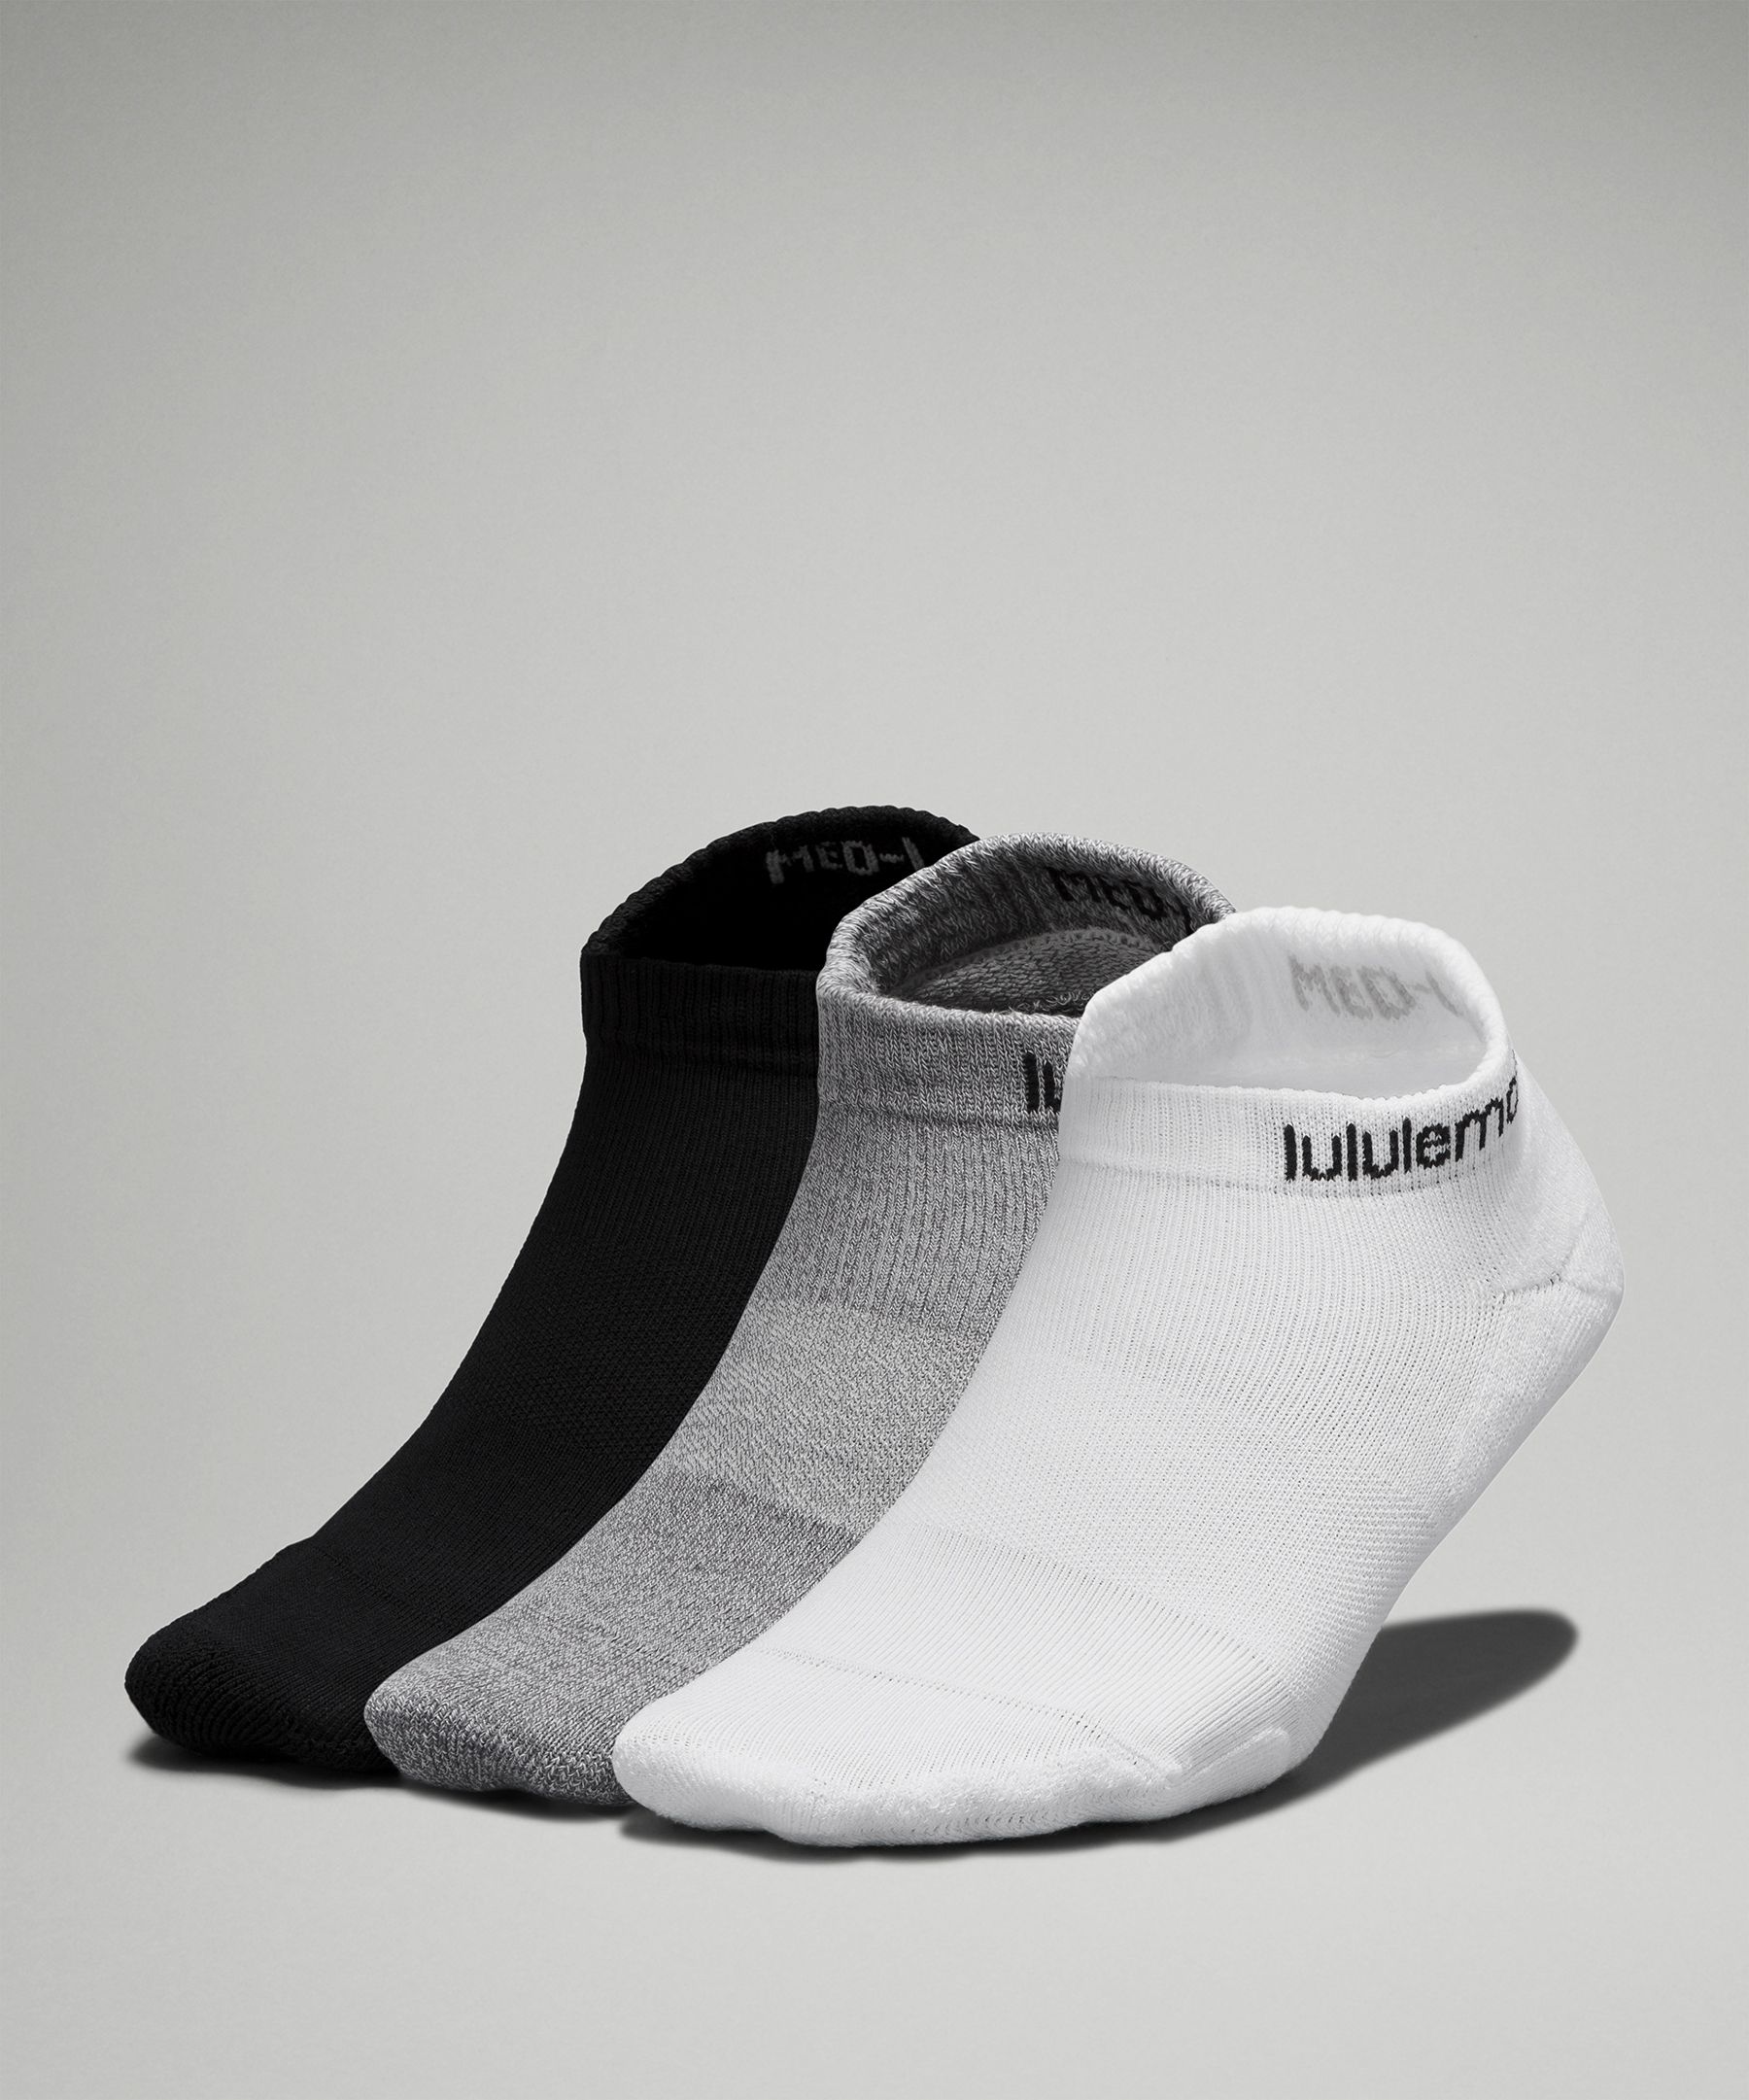 Lululemon Daily Stride Comfort Ankle Socks 3 Pack